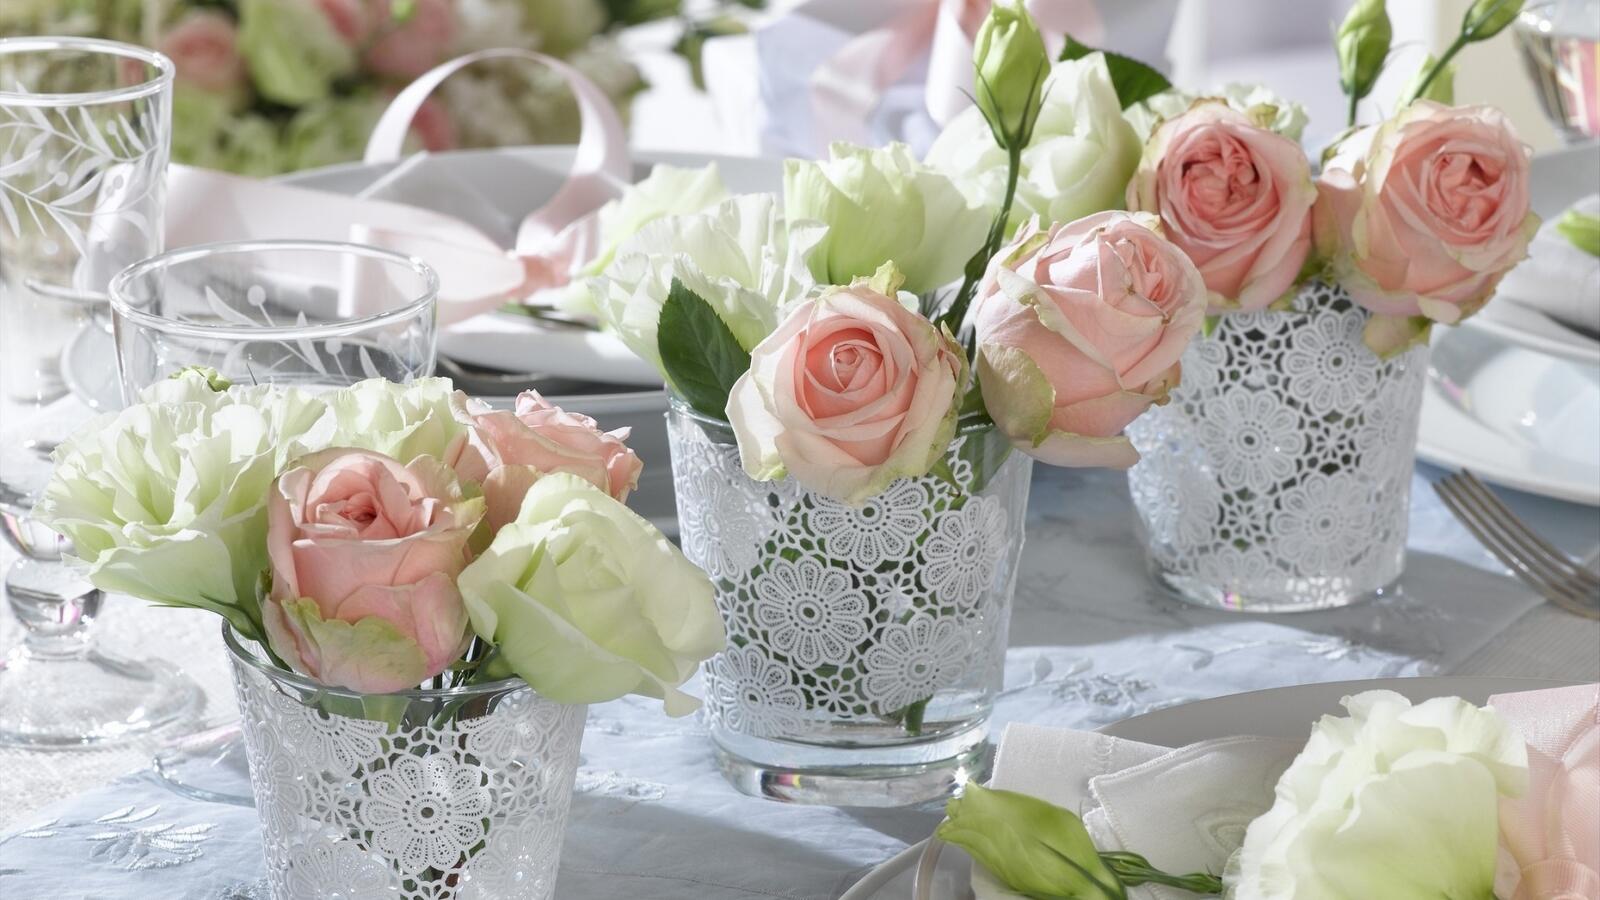 Wallpapers vases decor roses on the desktop